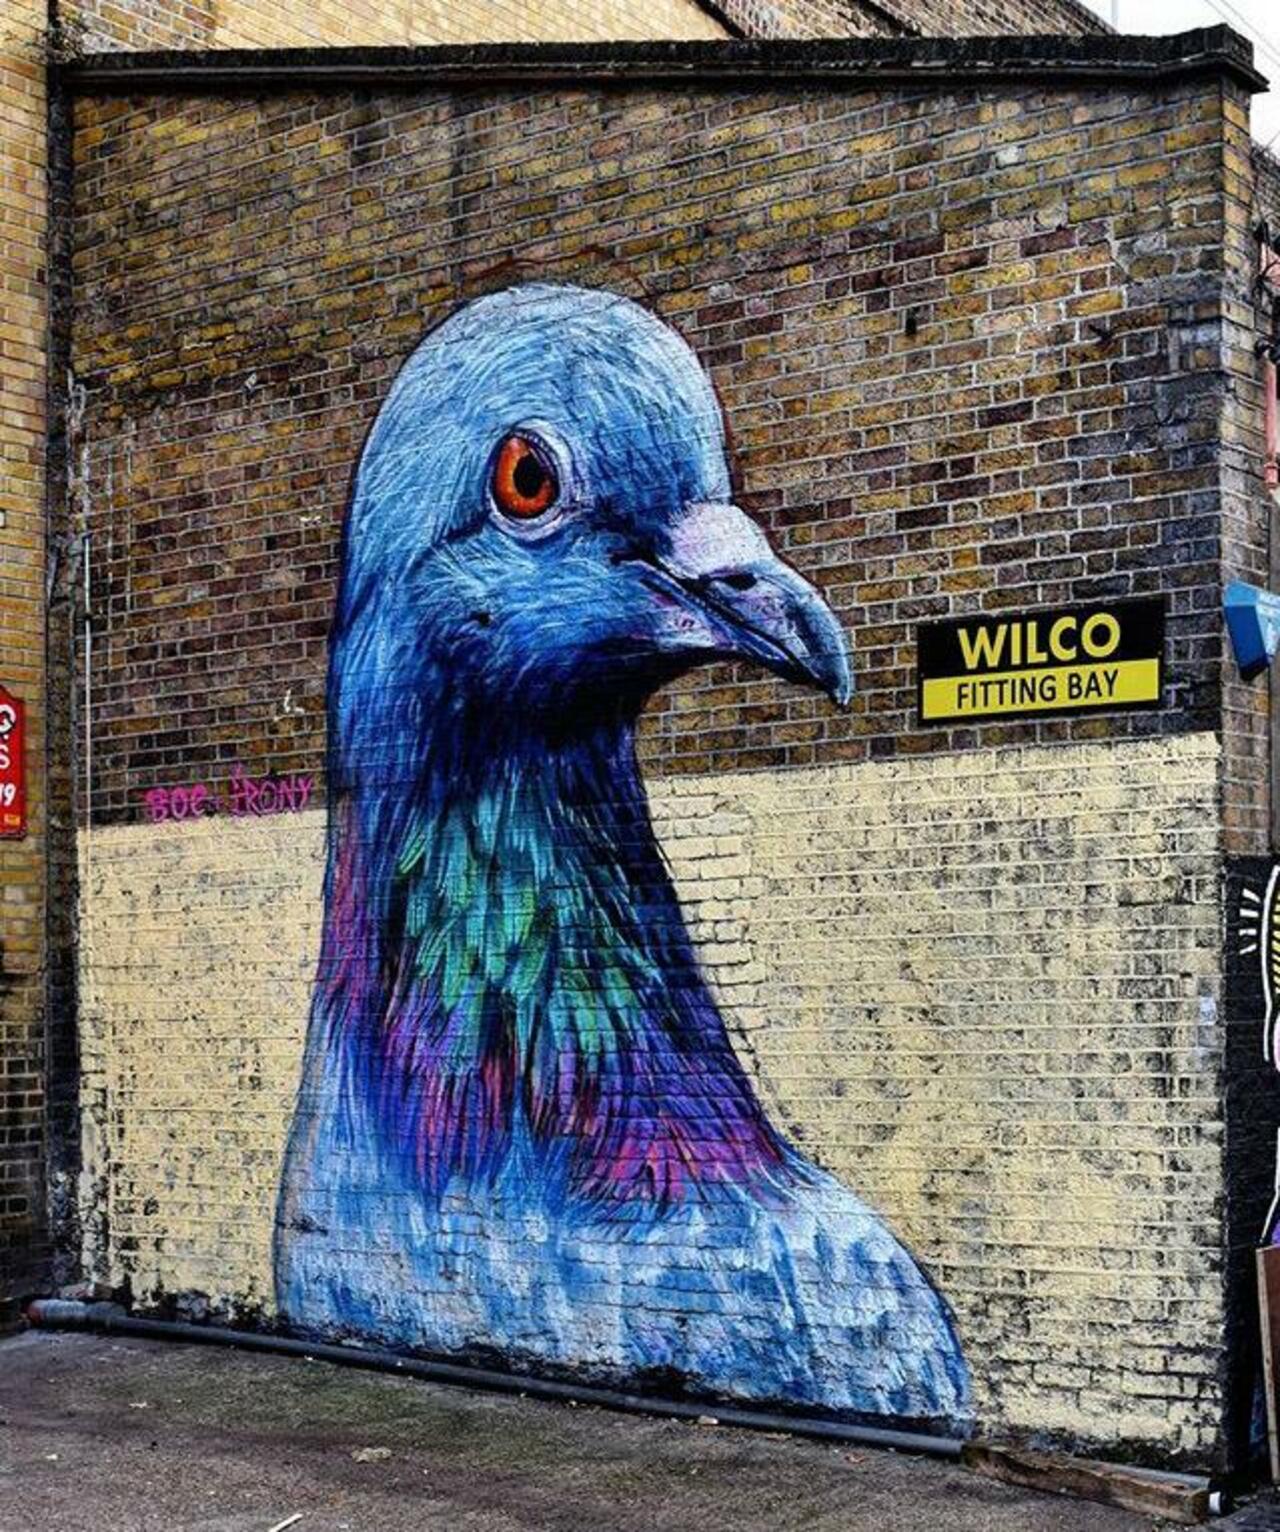 Street Art by Placee Boe & whoamirony in London 

#art #graffiti #mural #streetart http://t.co/B5VfWo14B7